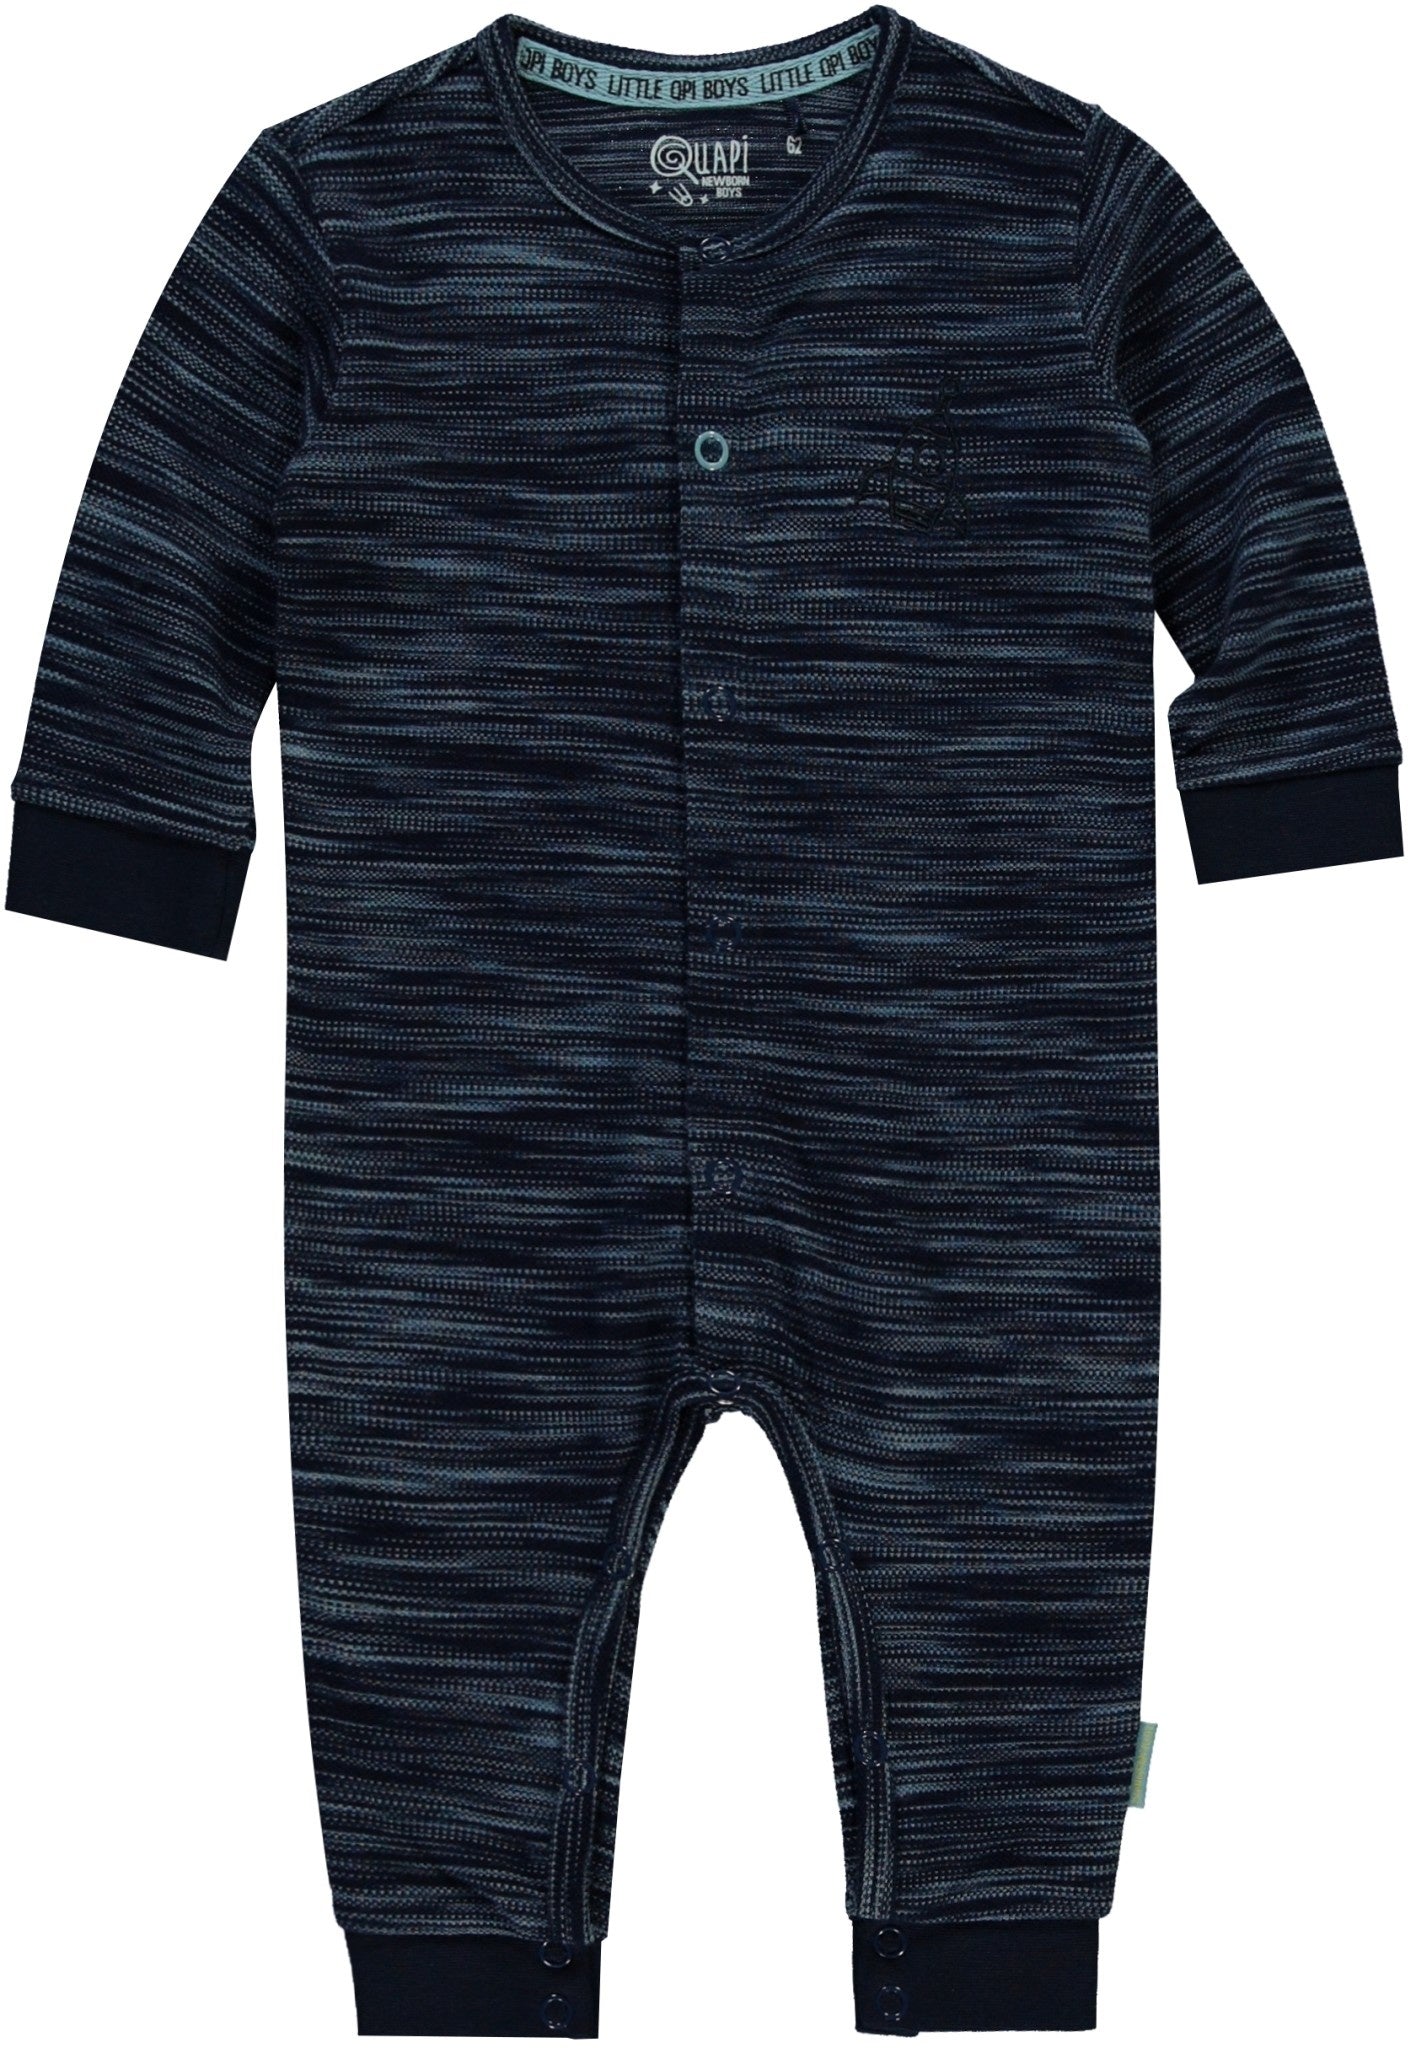 Quapi Baby suit Xiaro jeans Newborn